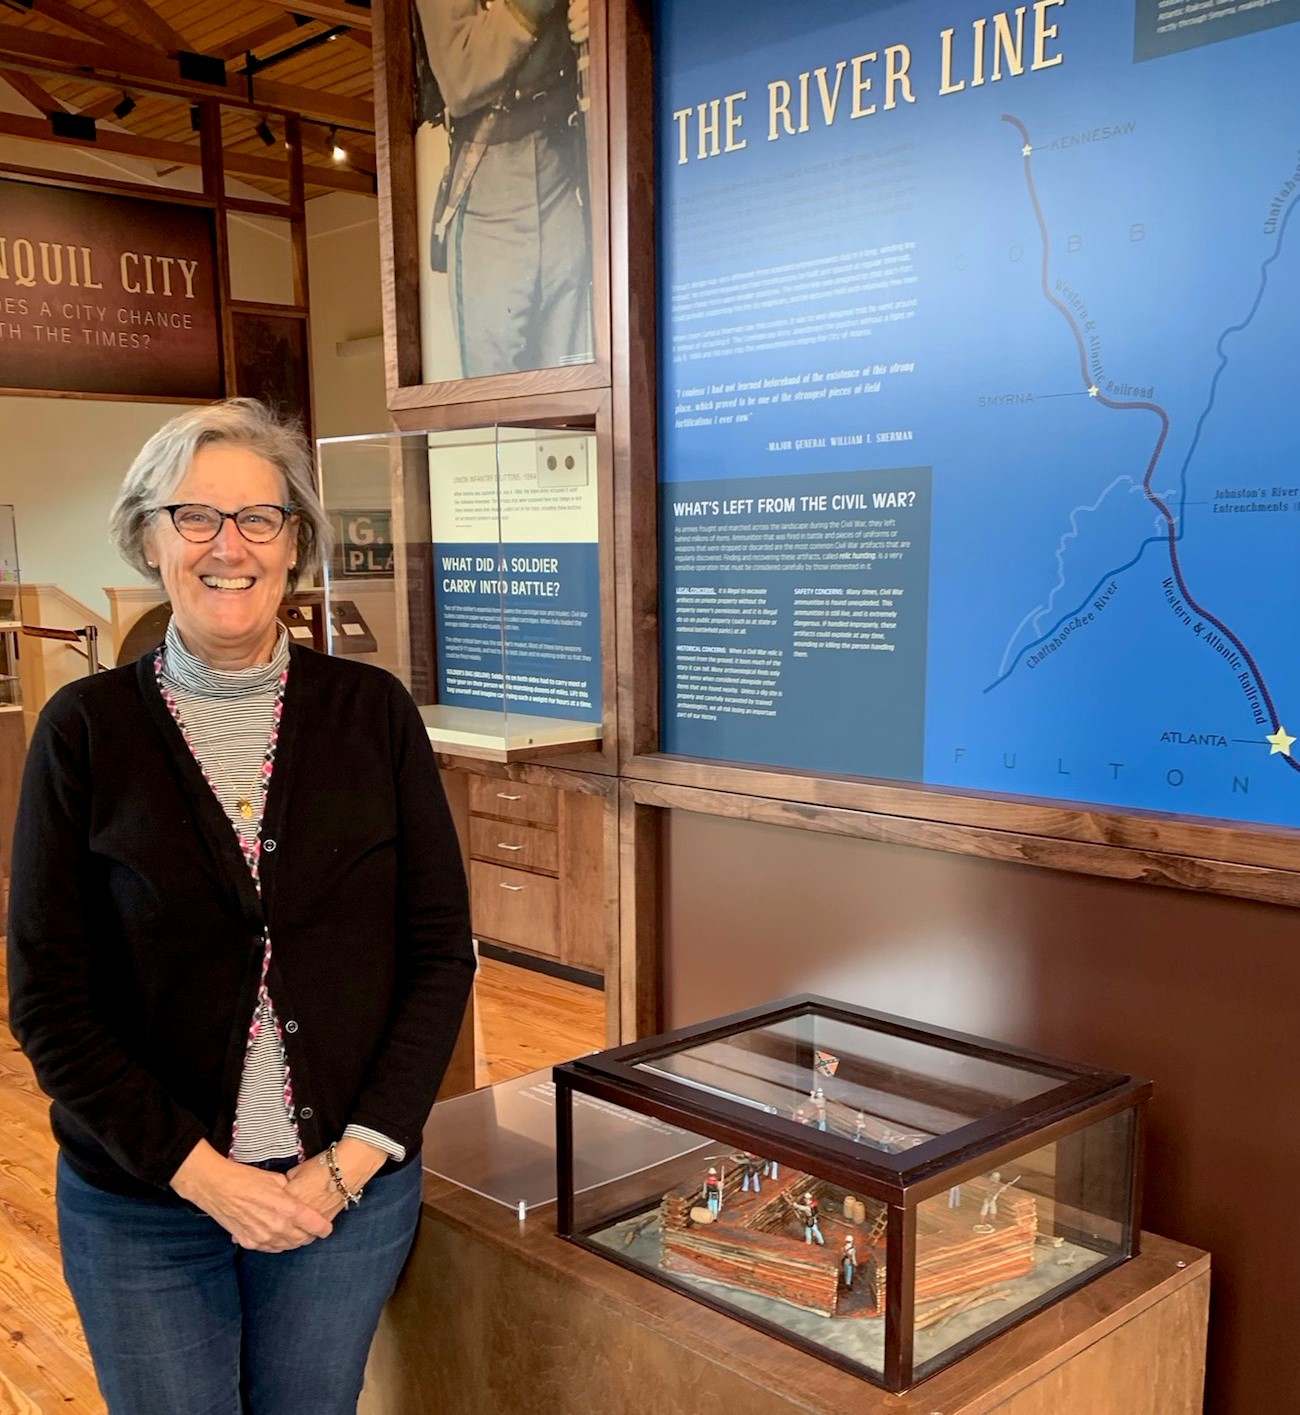 Margaret Jourden, The River Line Historic Area's Shoupade Park Coordinator, stands next to the River Line and Shoupade display at the Smyrna History Museum